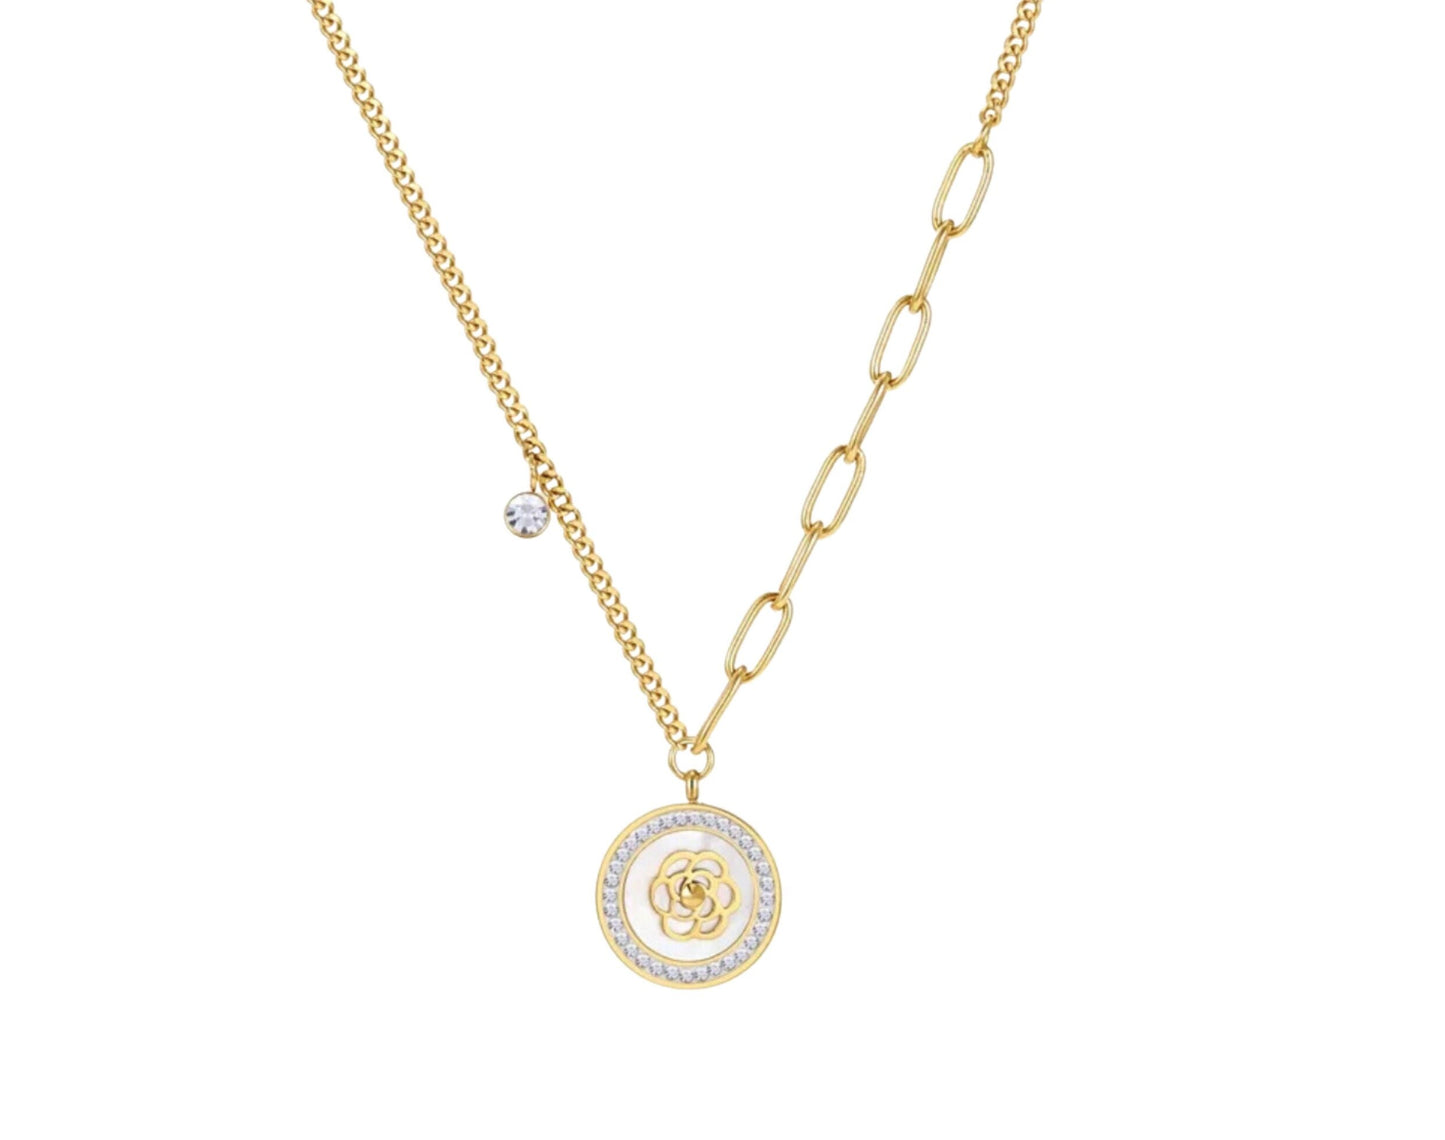 Camellia Flower Gold Pendant Necklace